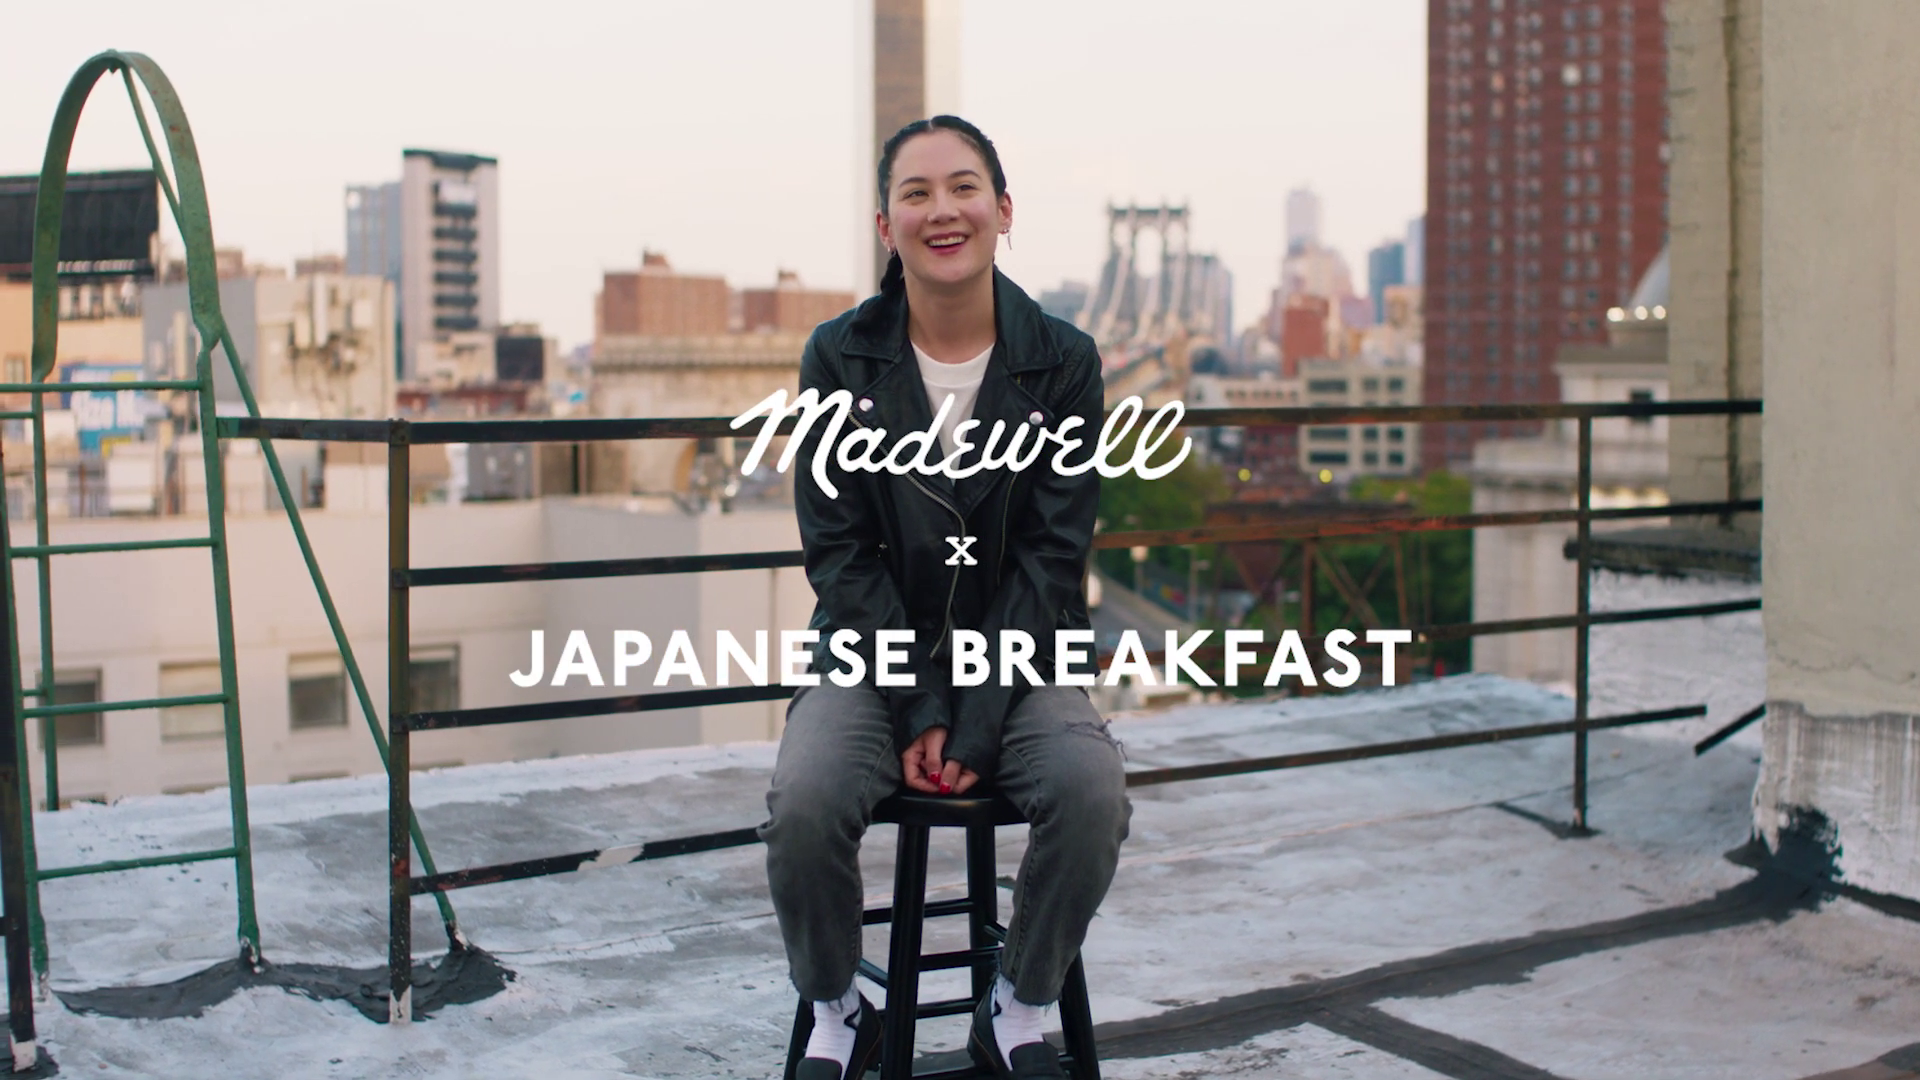 Madewell x Japanese Breakfast